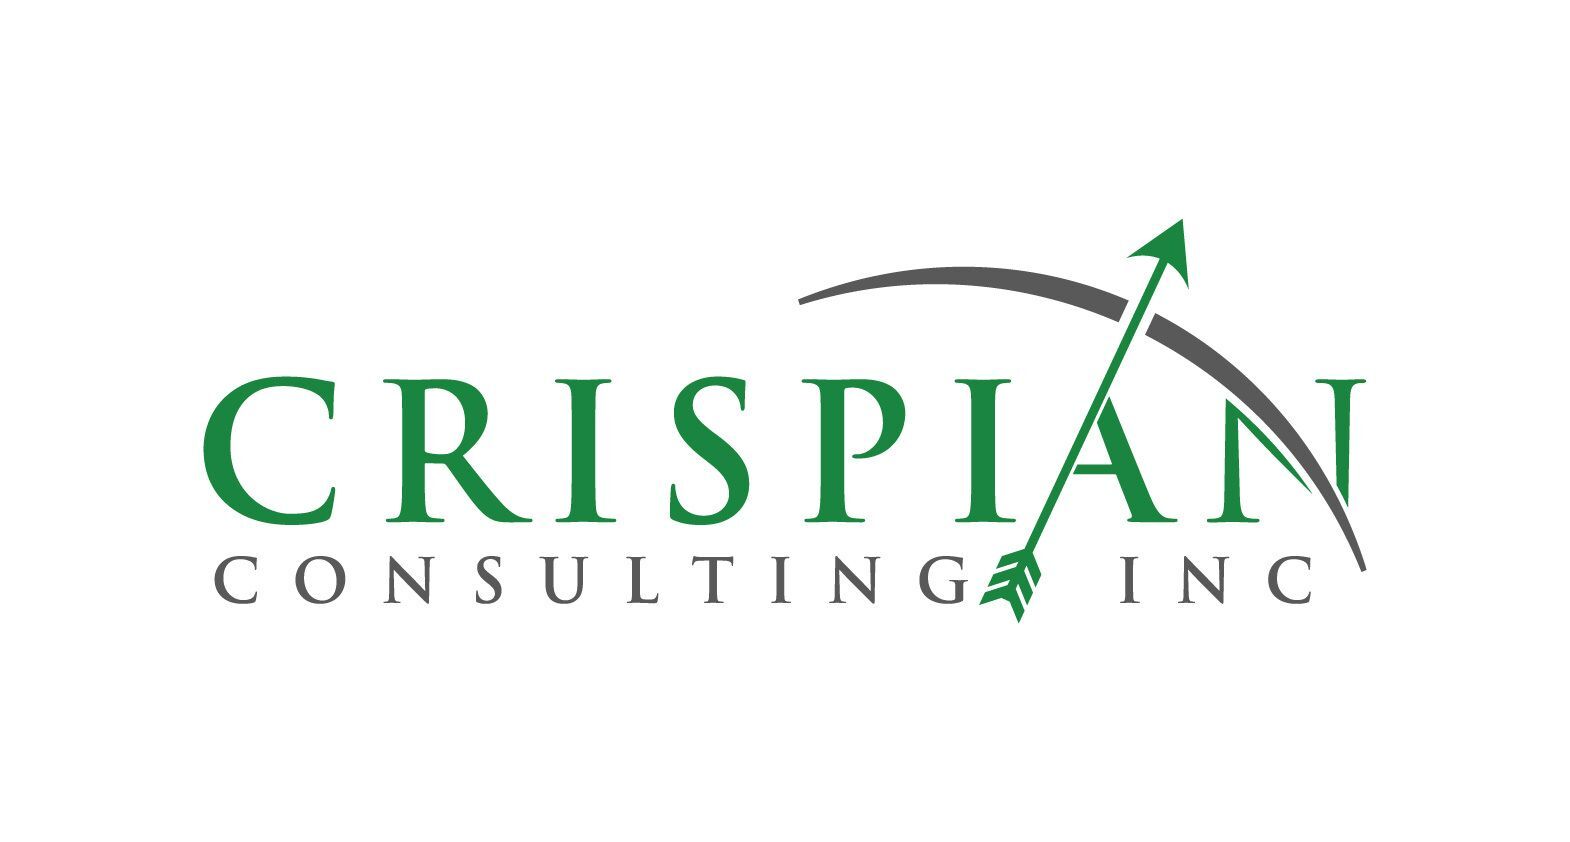 Crispian Consulting, Inc